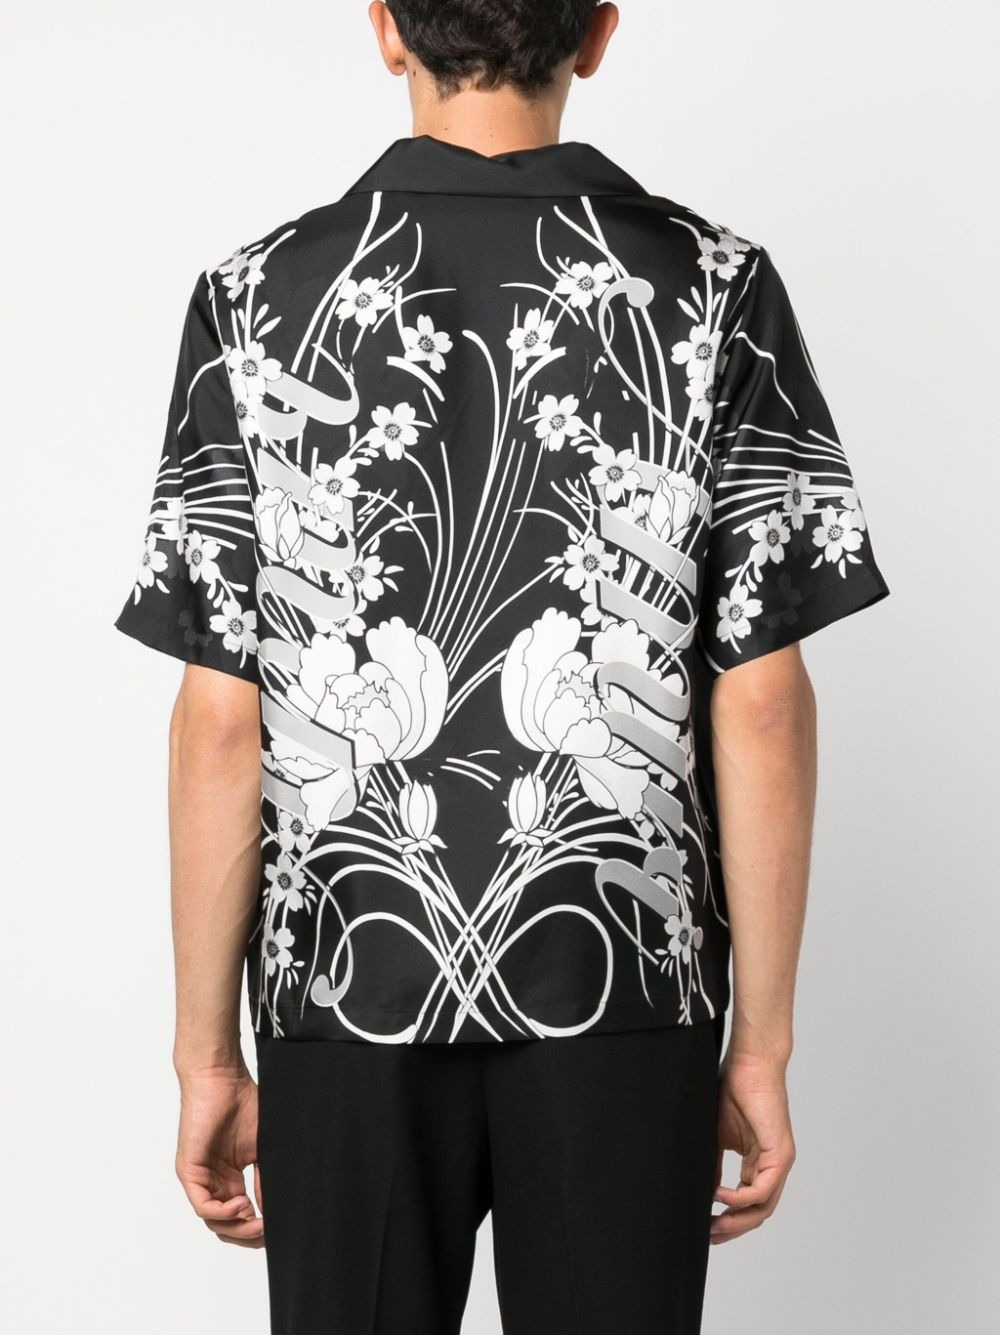 AMIRI floral-print silk shorts - Black Short leggings with logo